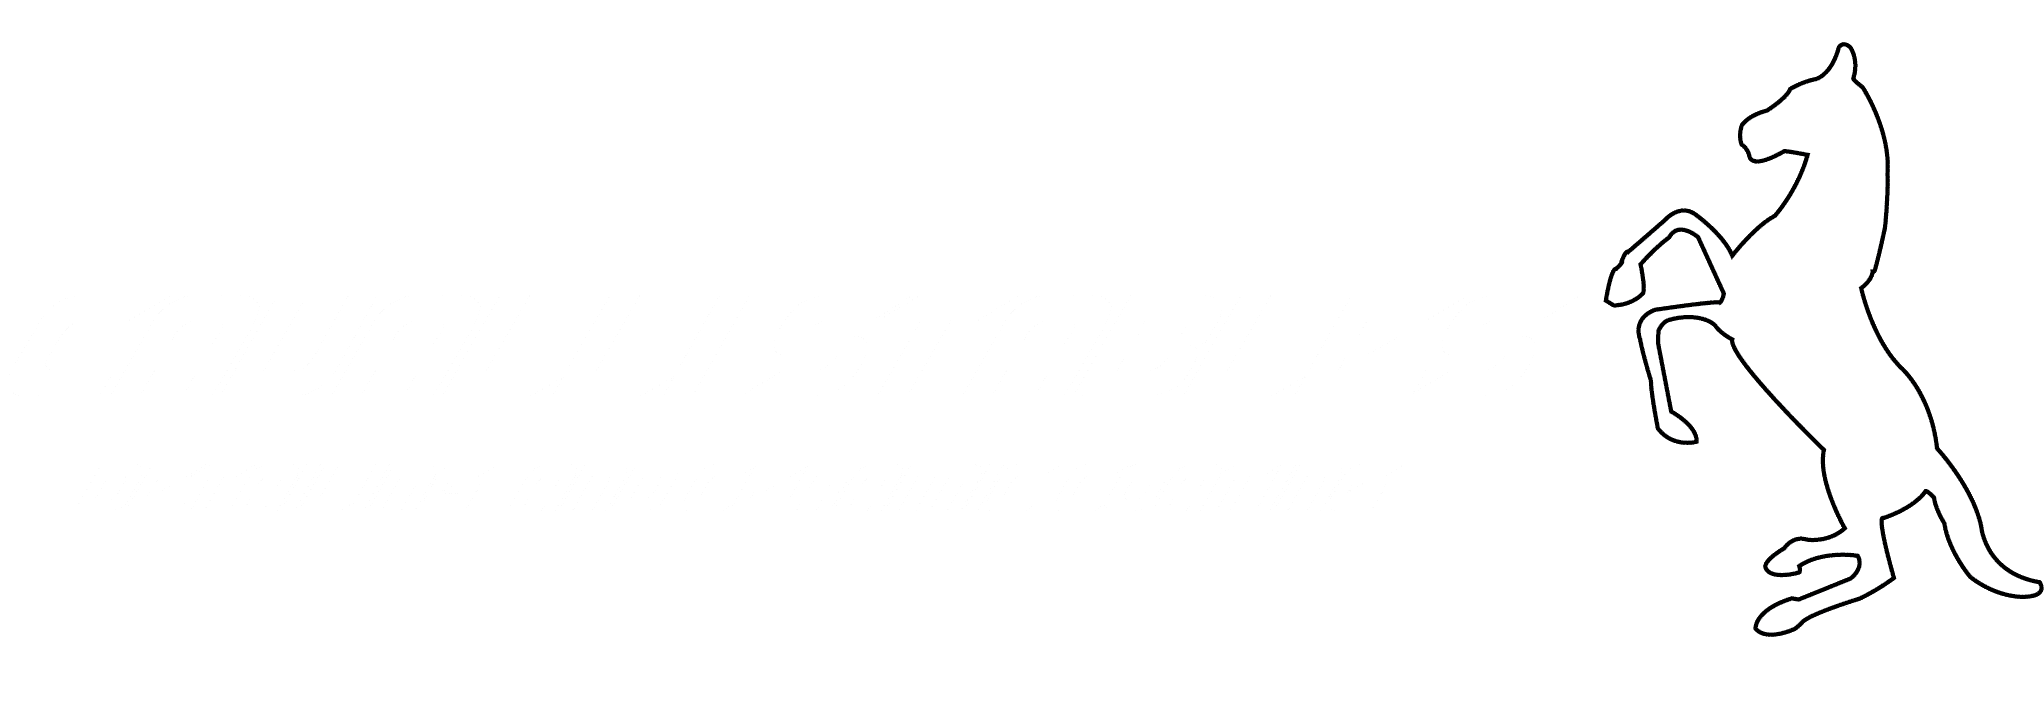 Cavalli Stables Detailing and Ceramic Coating